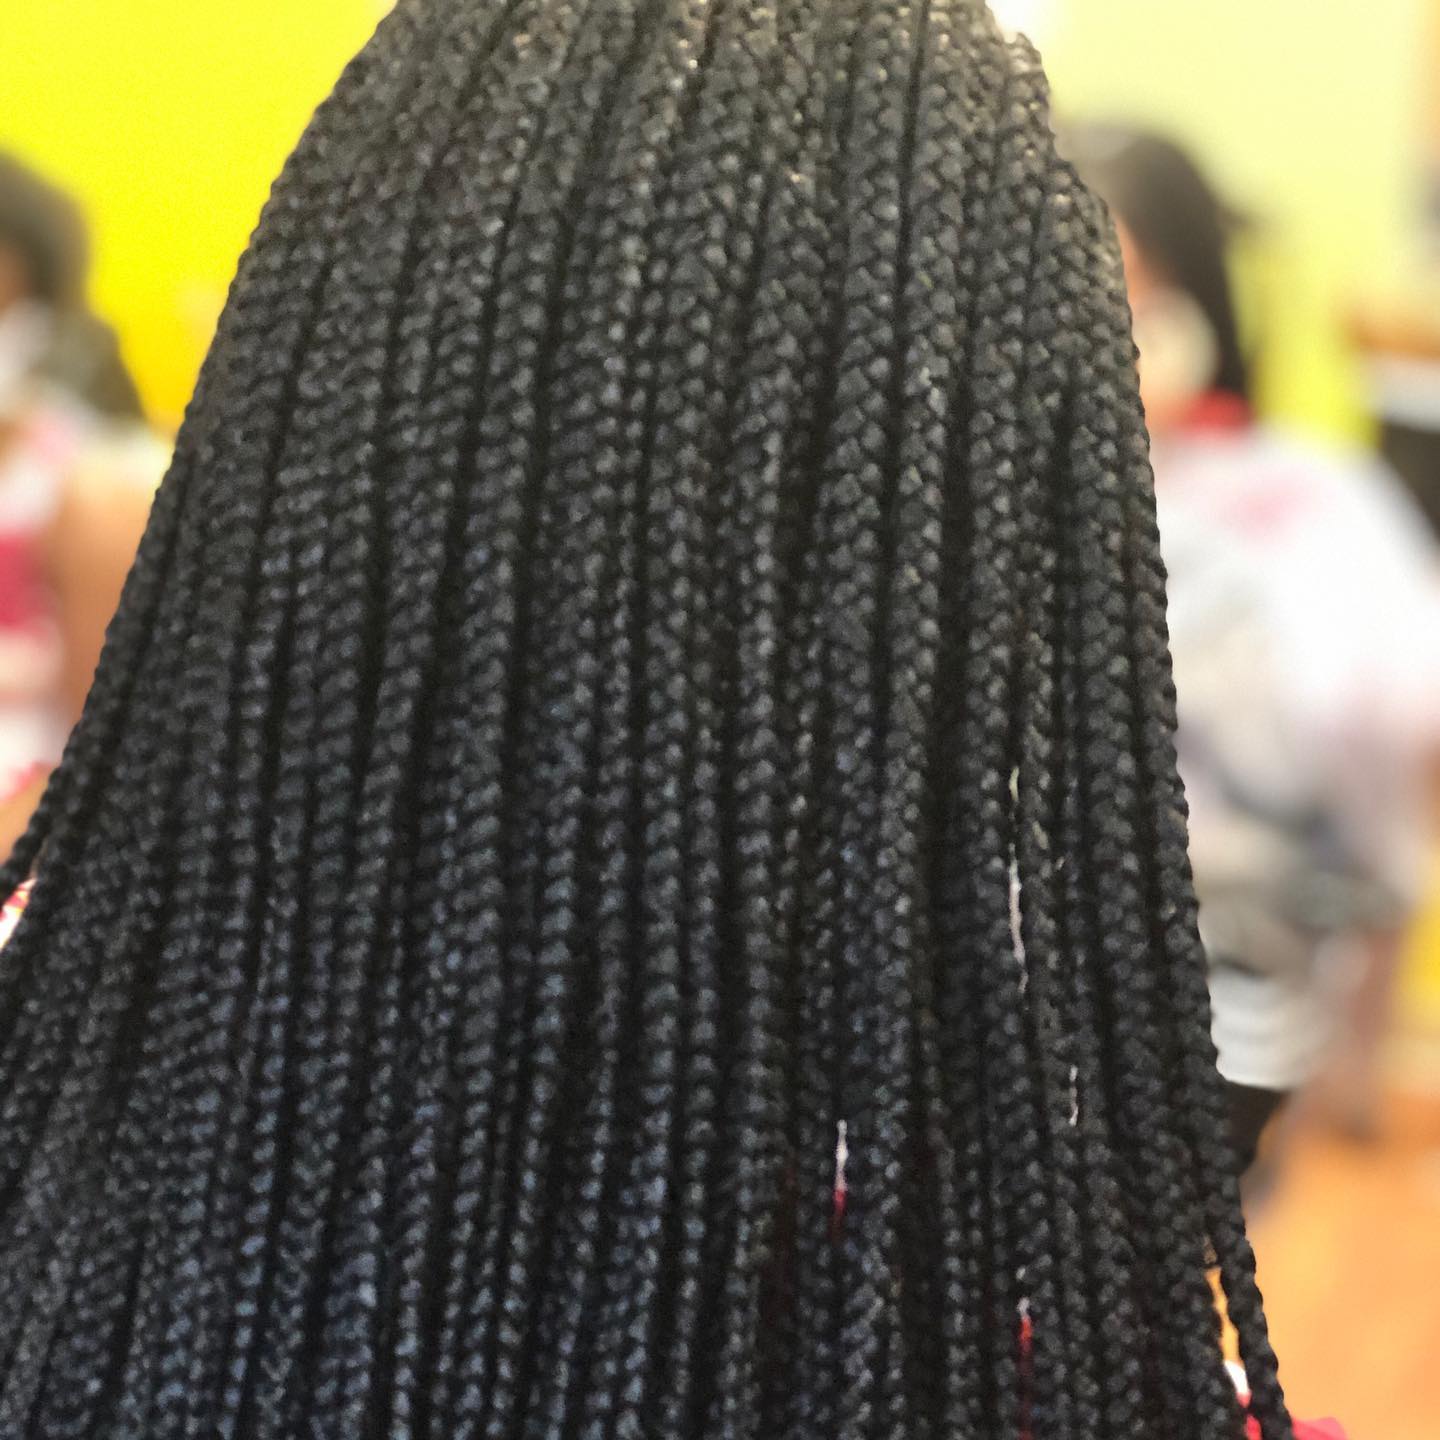 S & D Professional African Hair Braiding & Weaving 2027 Edgmont Ave, Chester Pennsylvania 19013